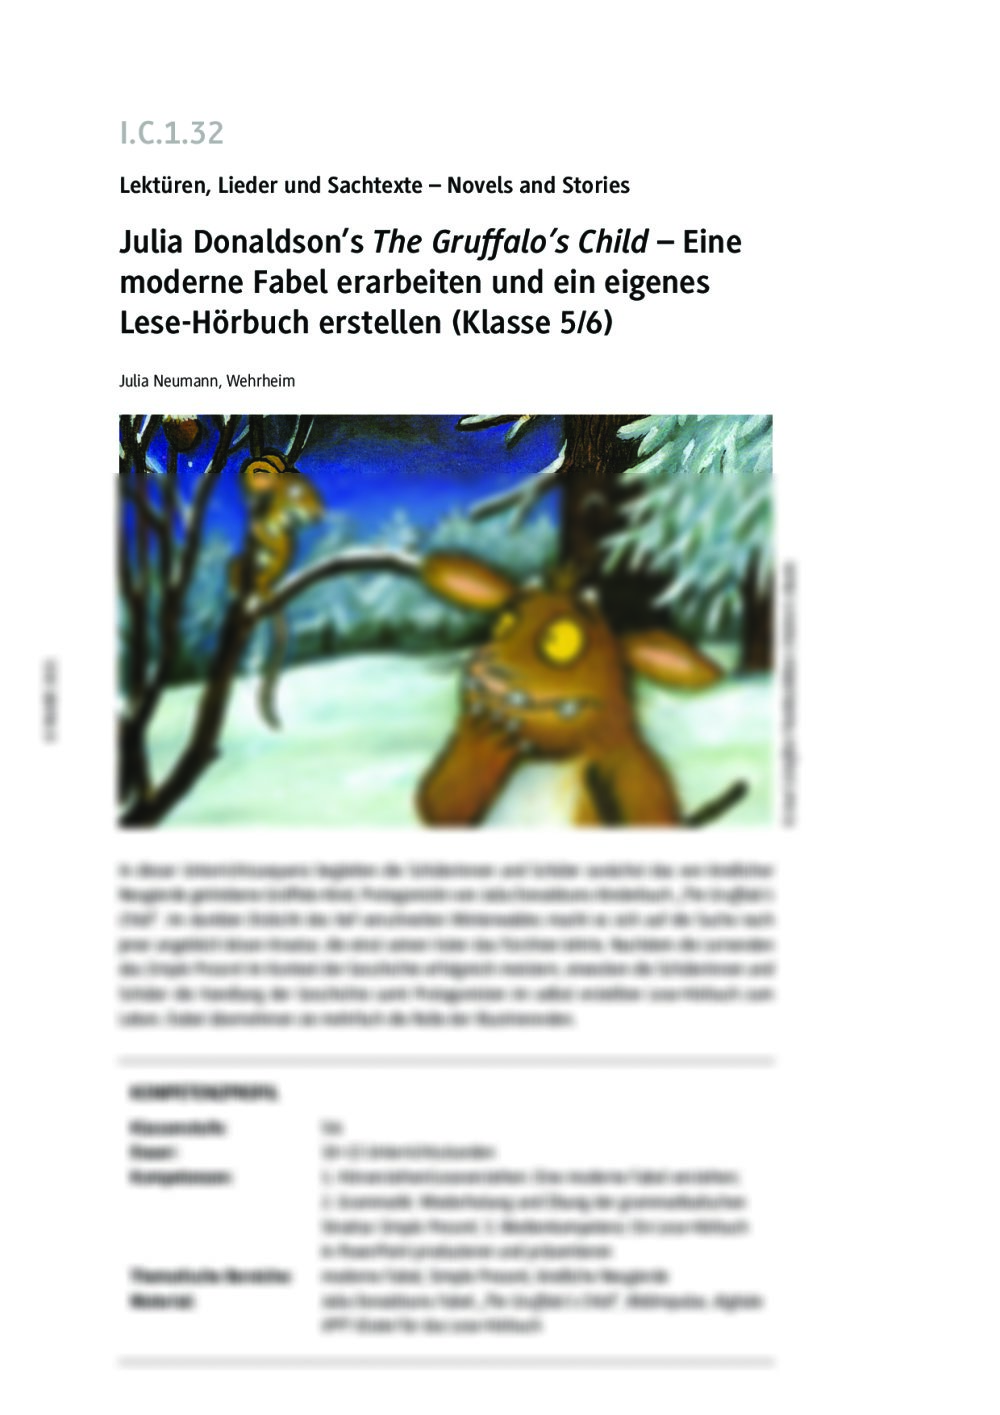 Julia Donaldson's "The Gruffalo's Child" - Seite 1